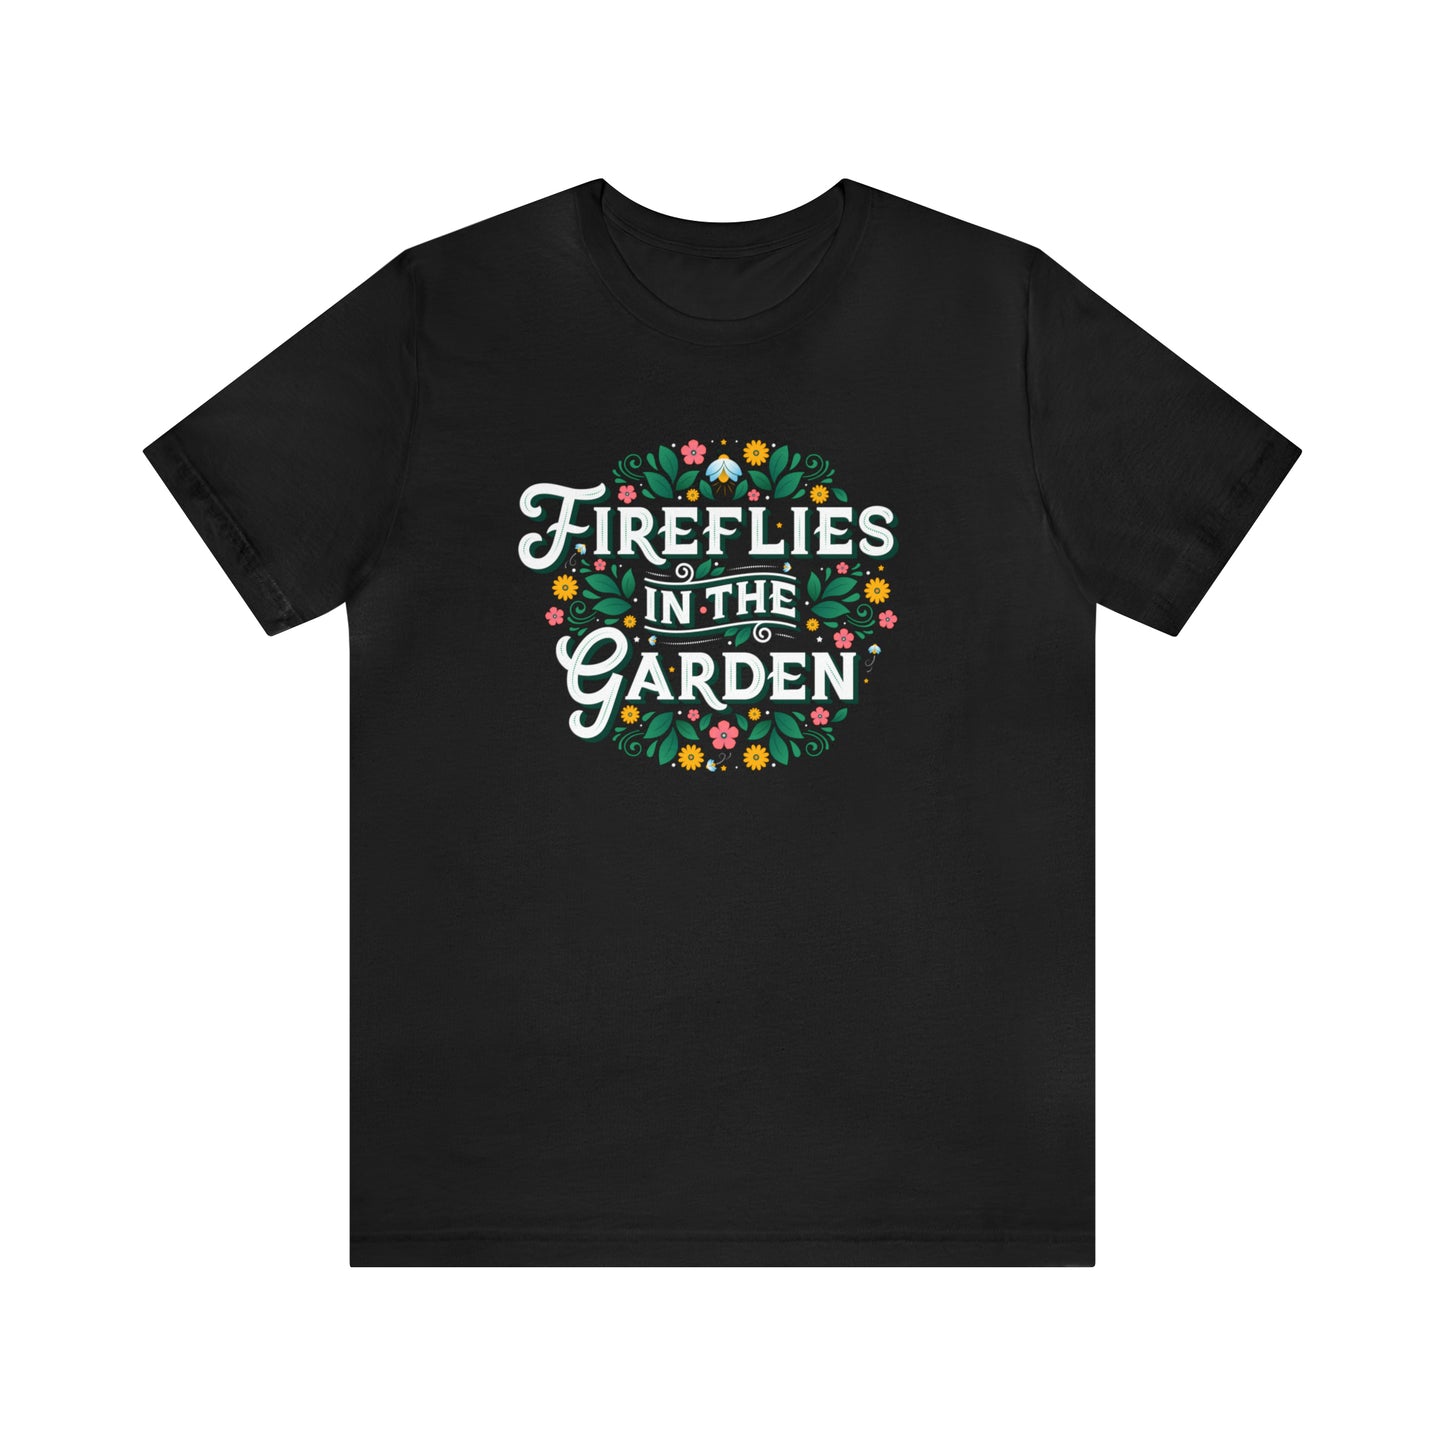 Cute Firefly Shirt with Botanical Wildflowers